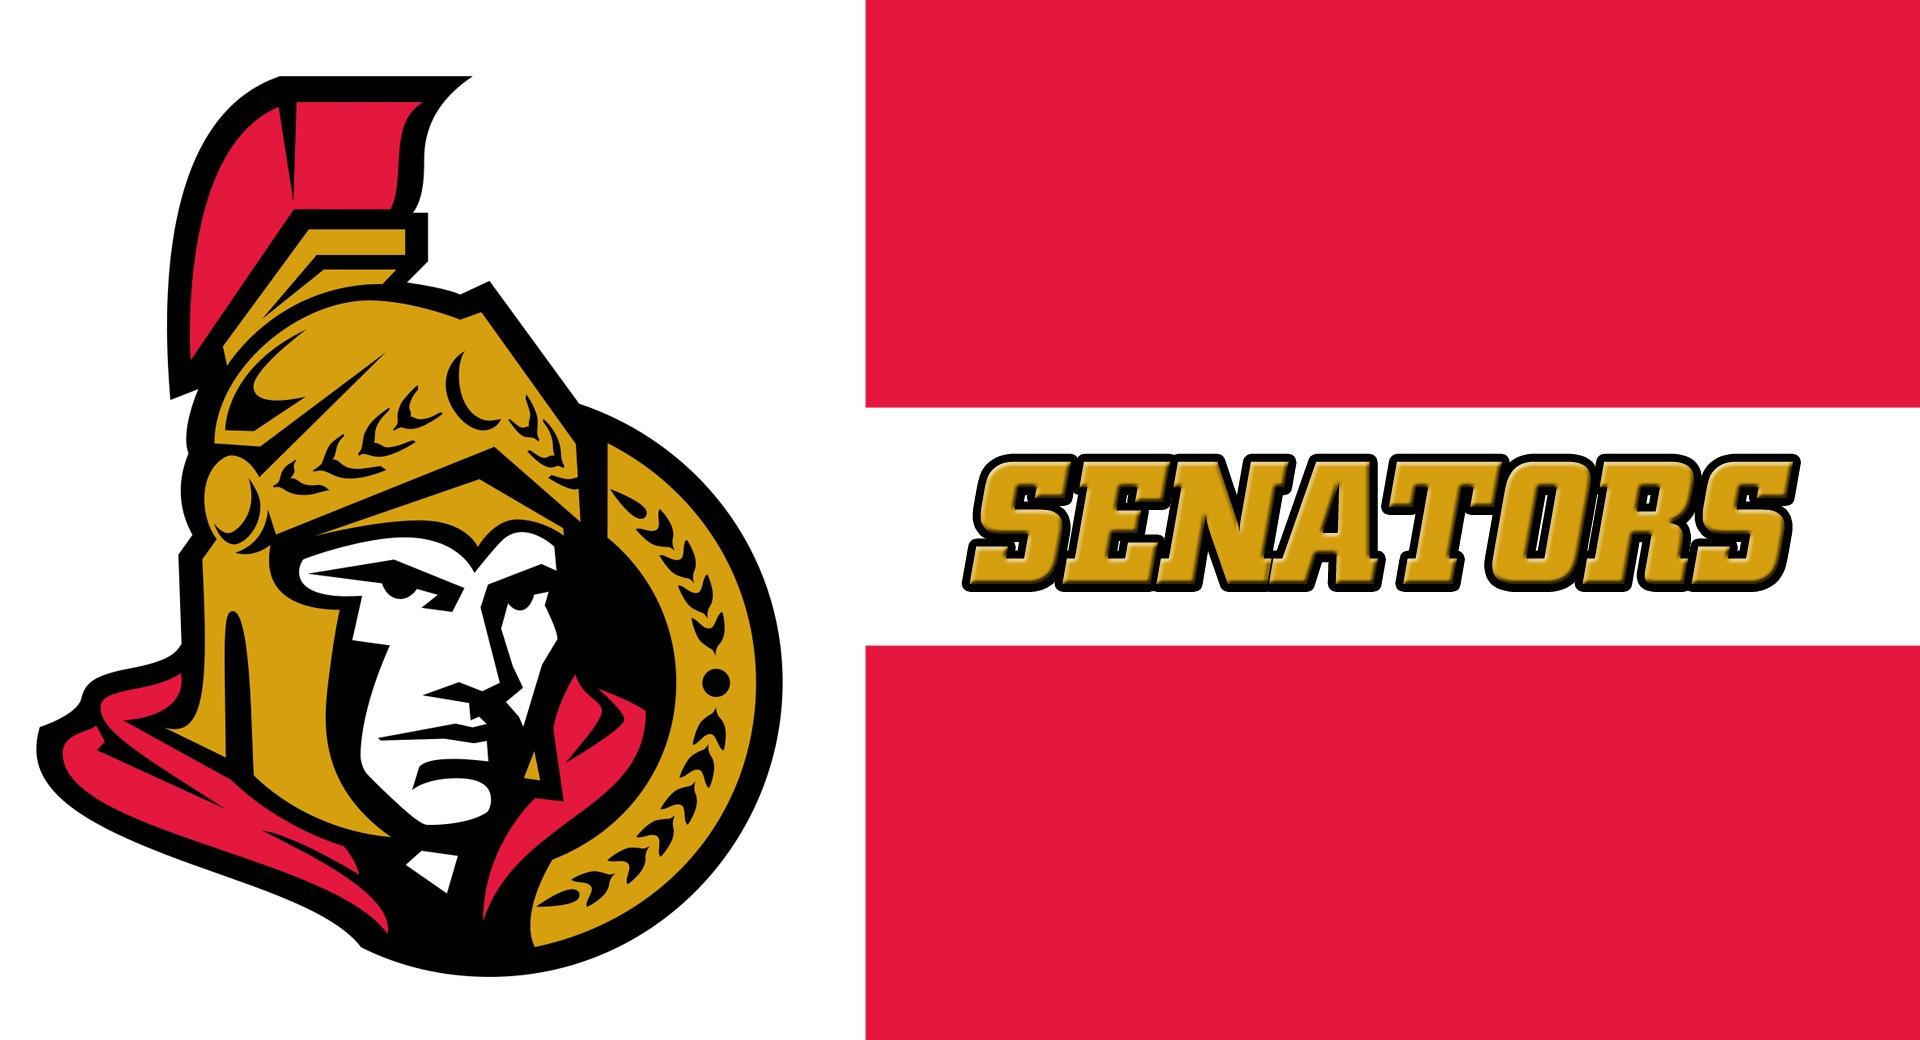 Ottawa Senators at 1024 x 768 size wallpapers HD quality